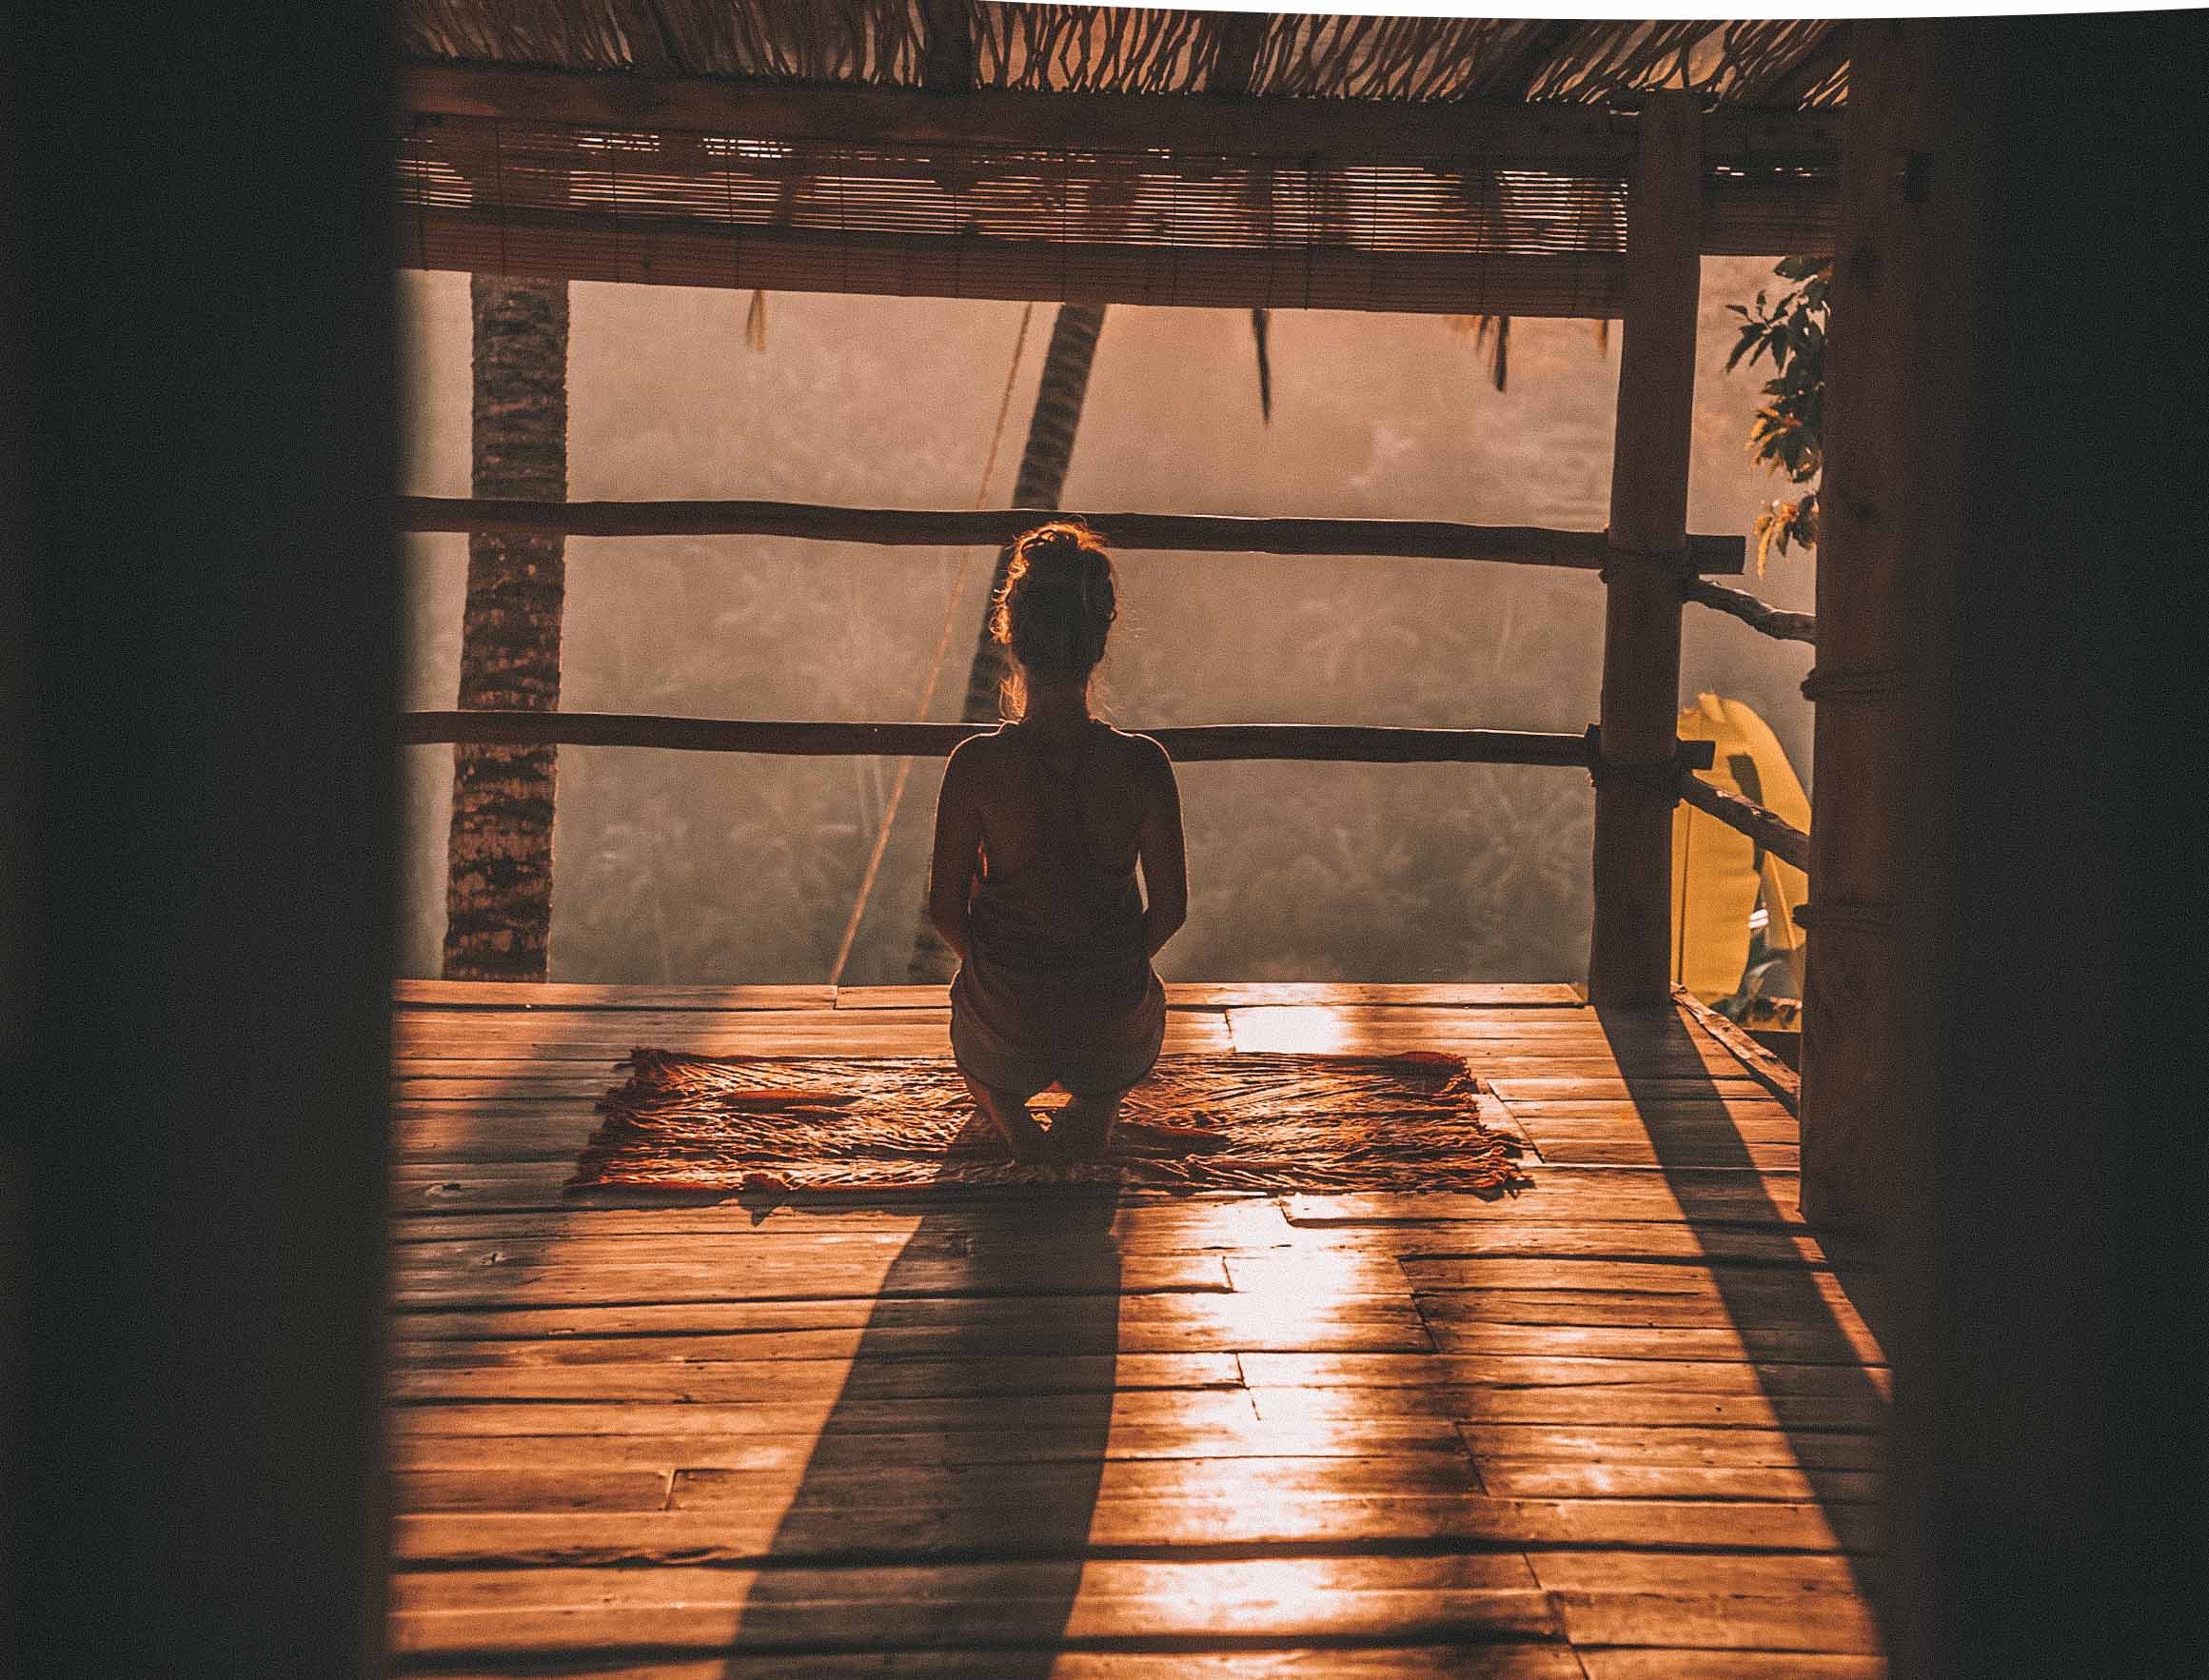 How does yoga get you in the meditation mindset?